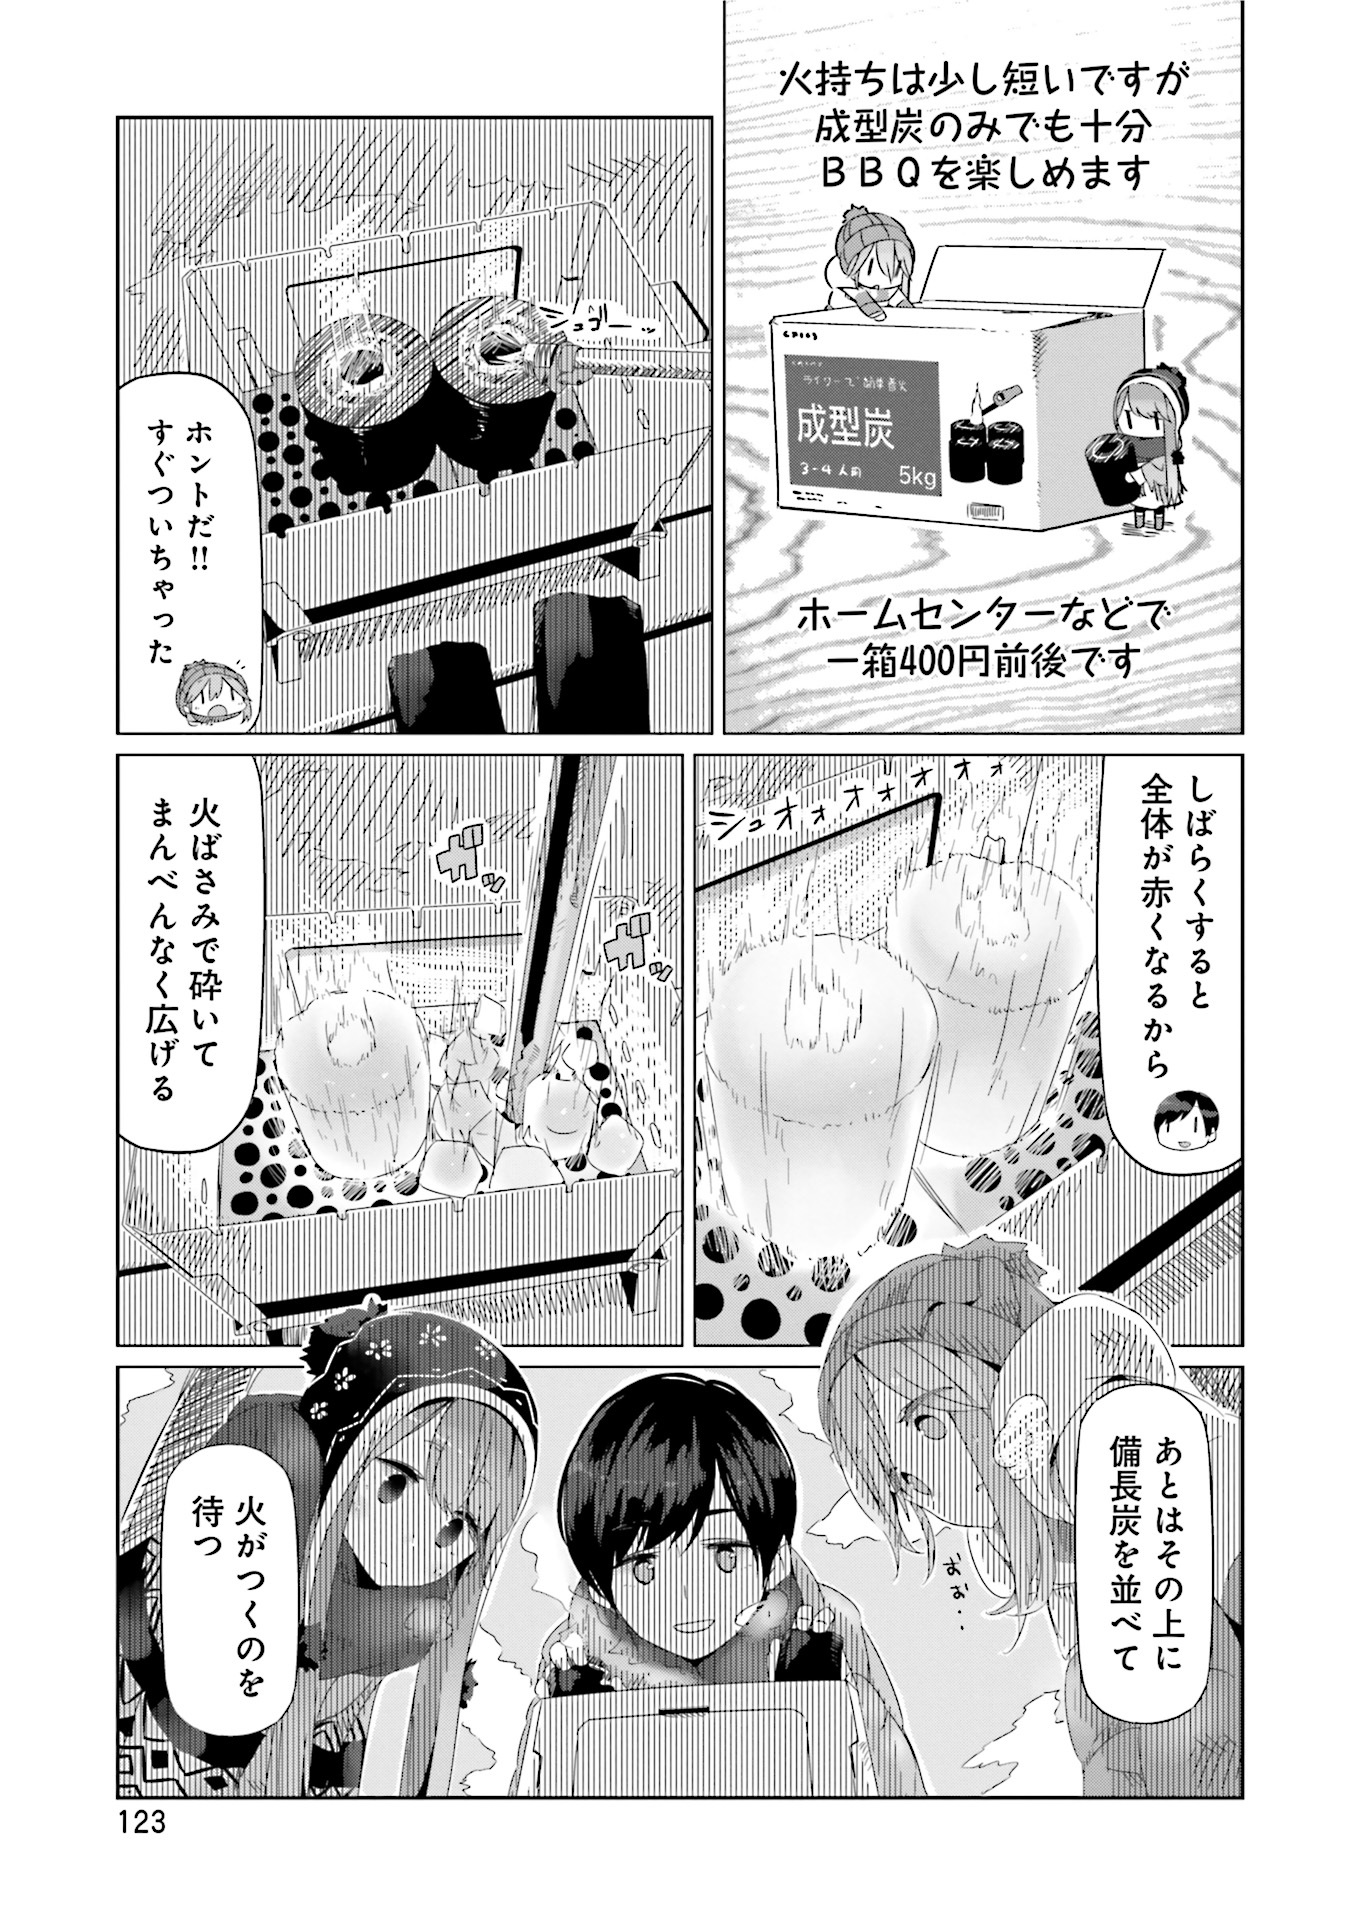 Yuru Camp - Chapter 11 - Page 22